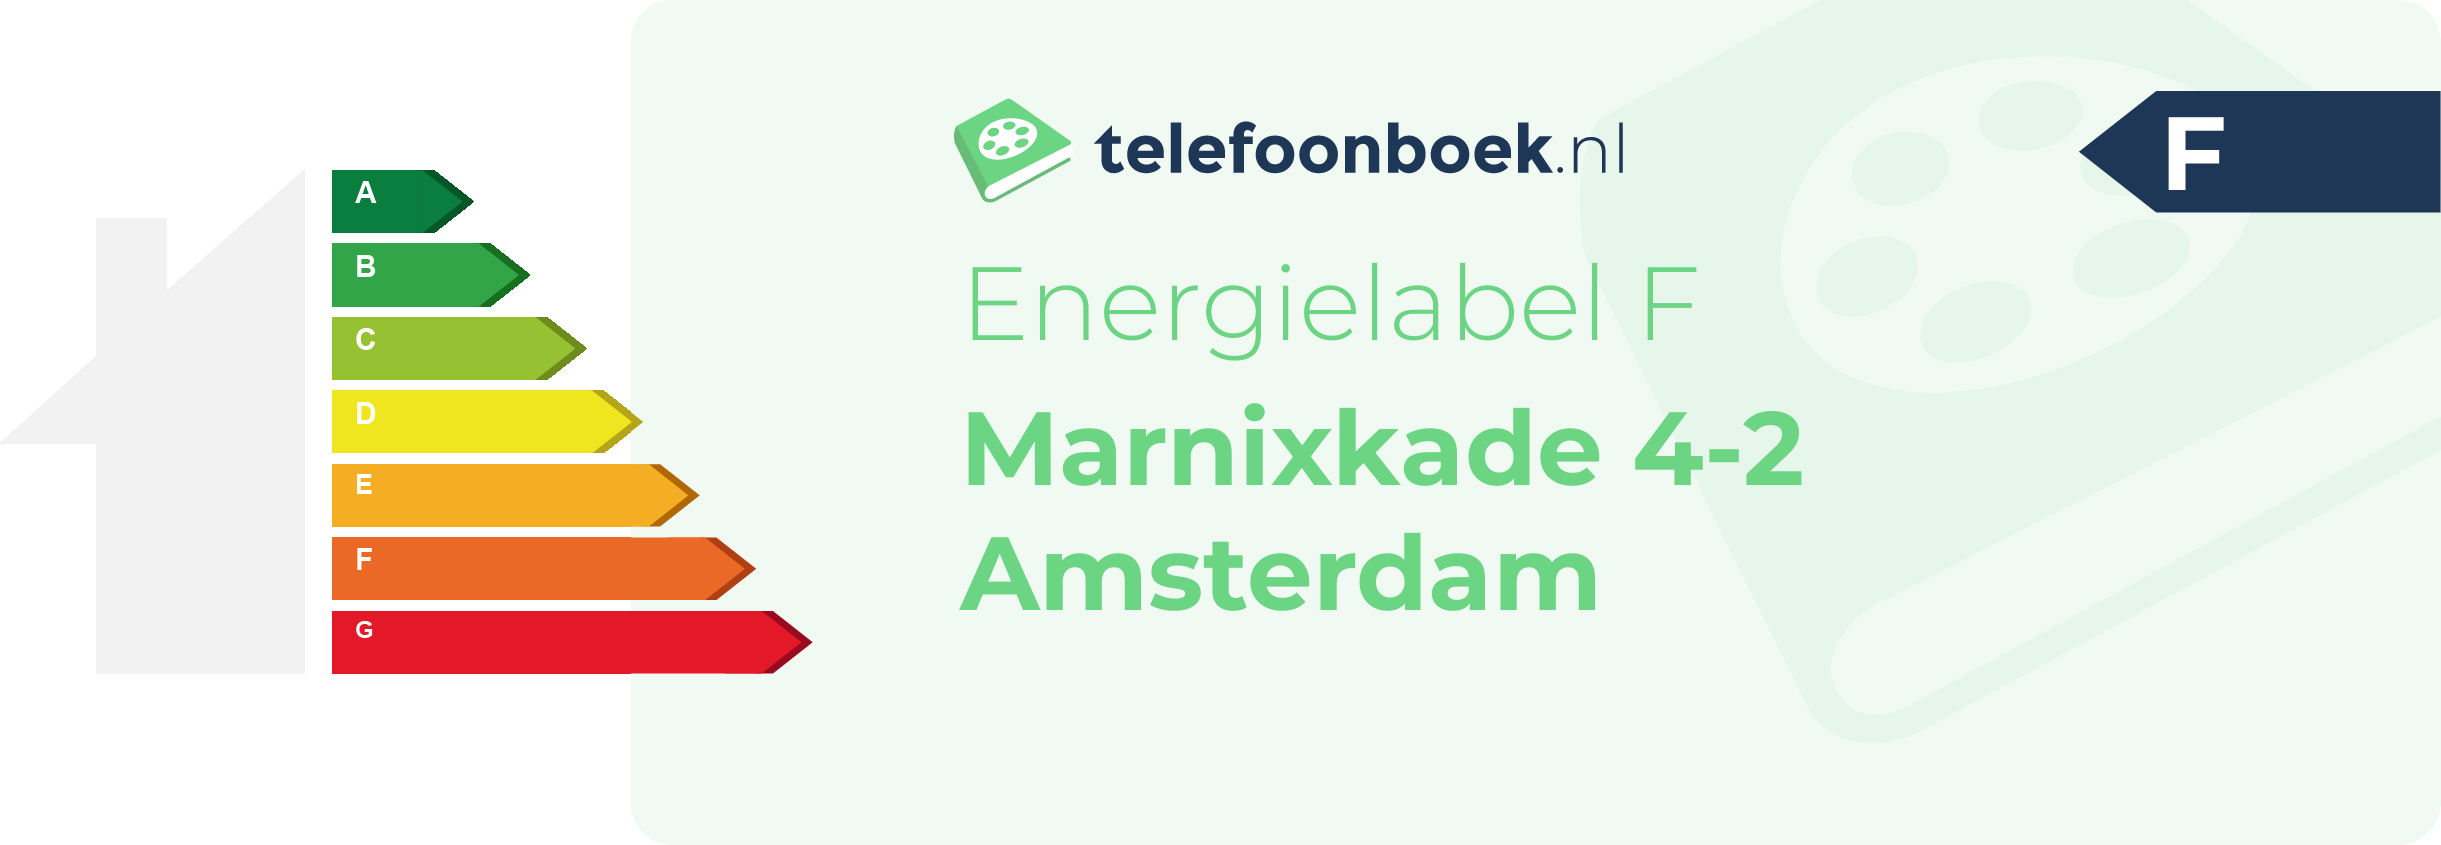 Energielabel Marnixkade 4-2 Amsterdam